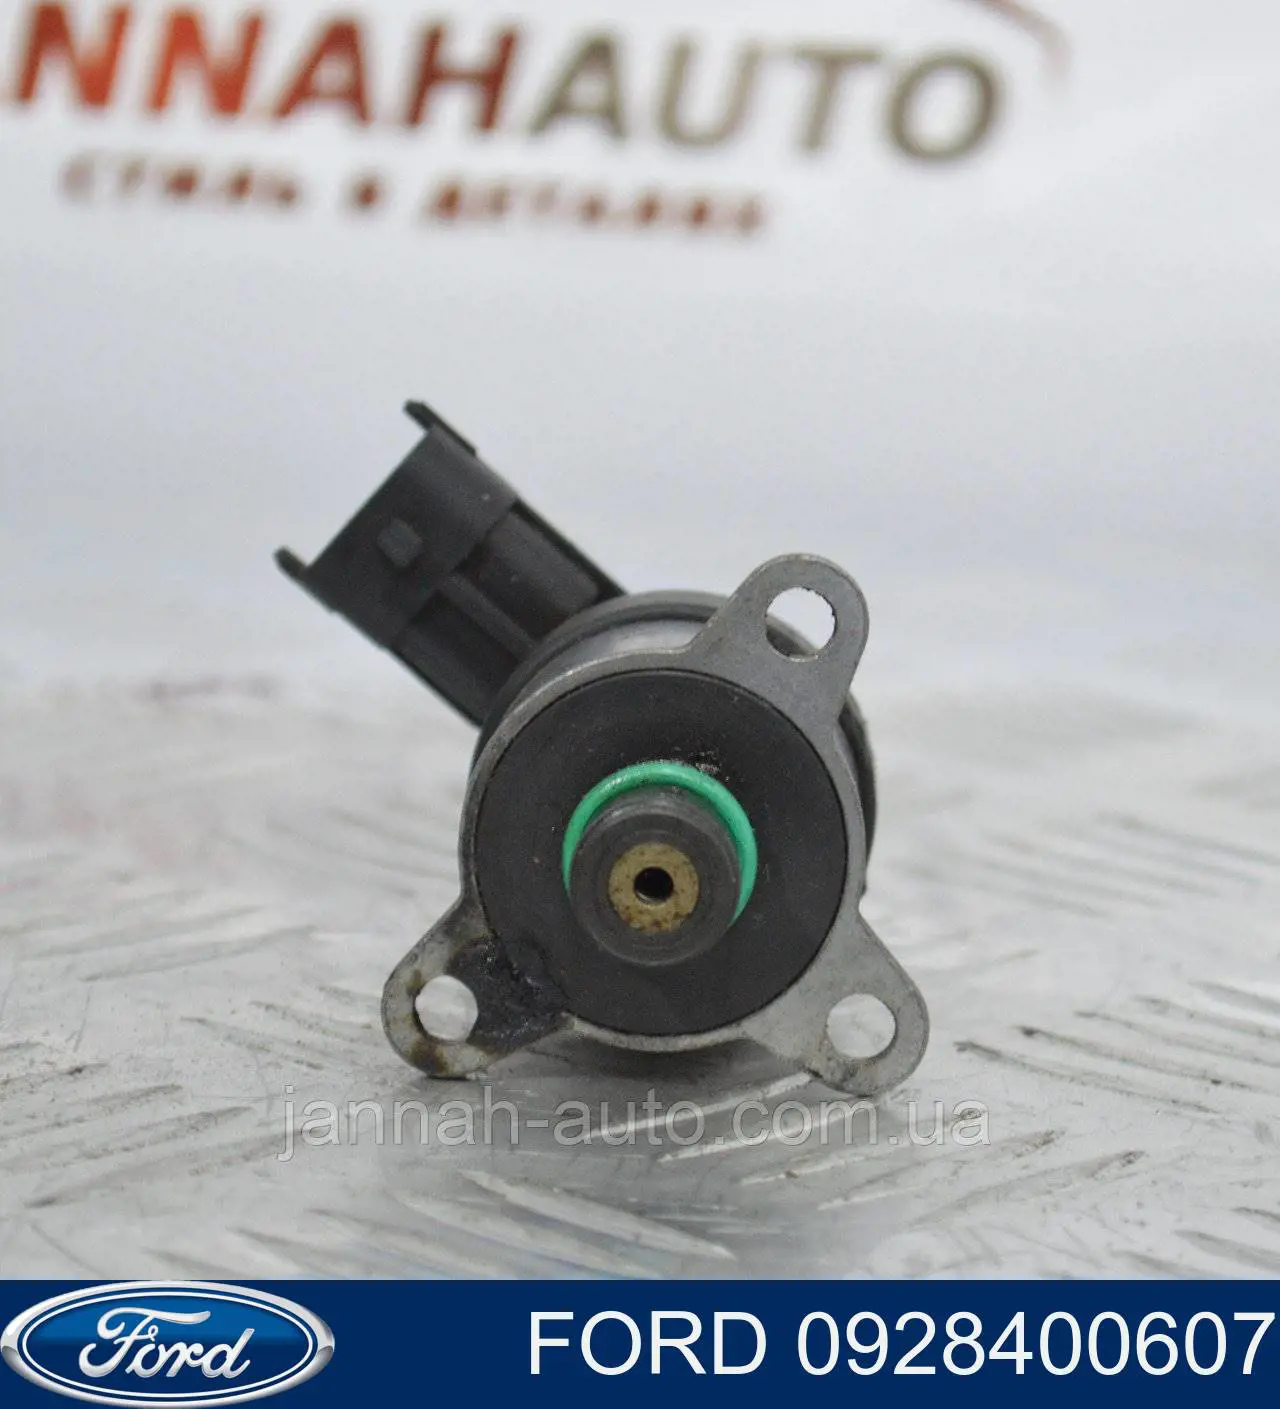 Клапан регулировки давления (редукционный клапан ТНВД) Common-Rail-System Ford 0928400607